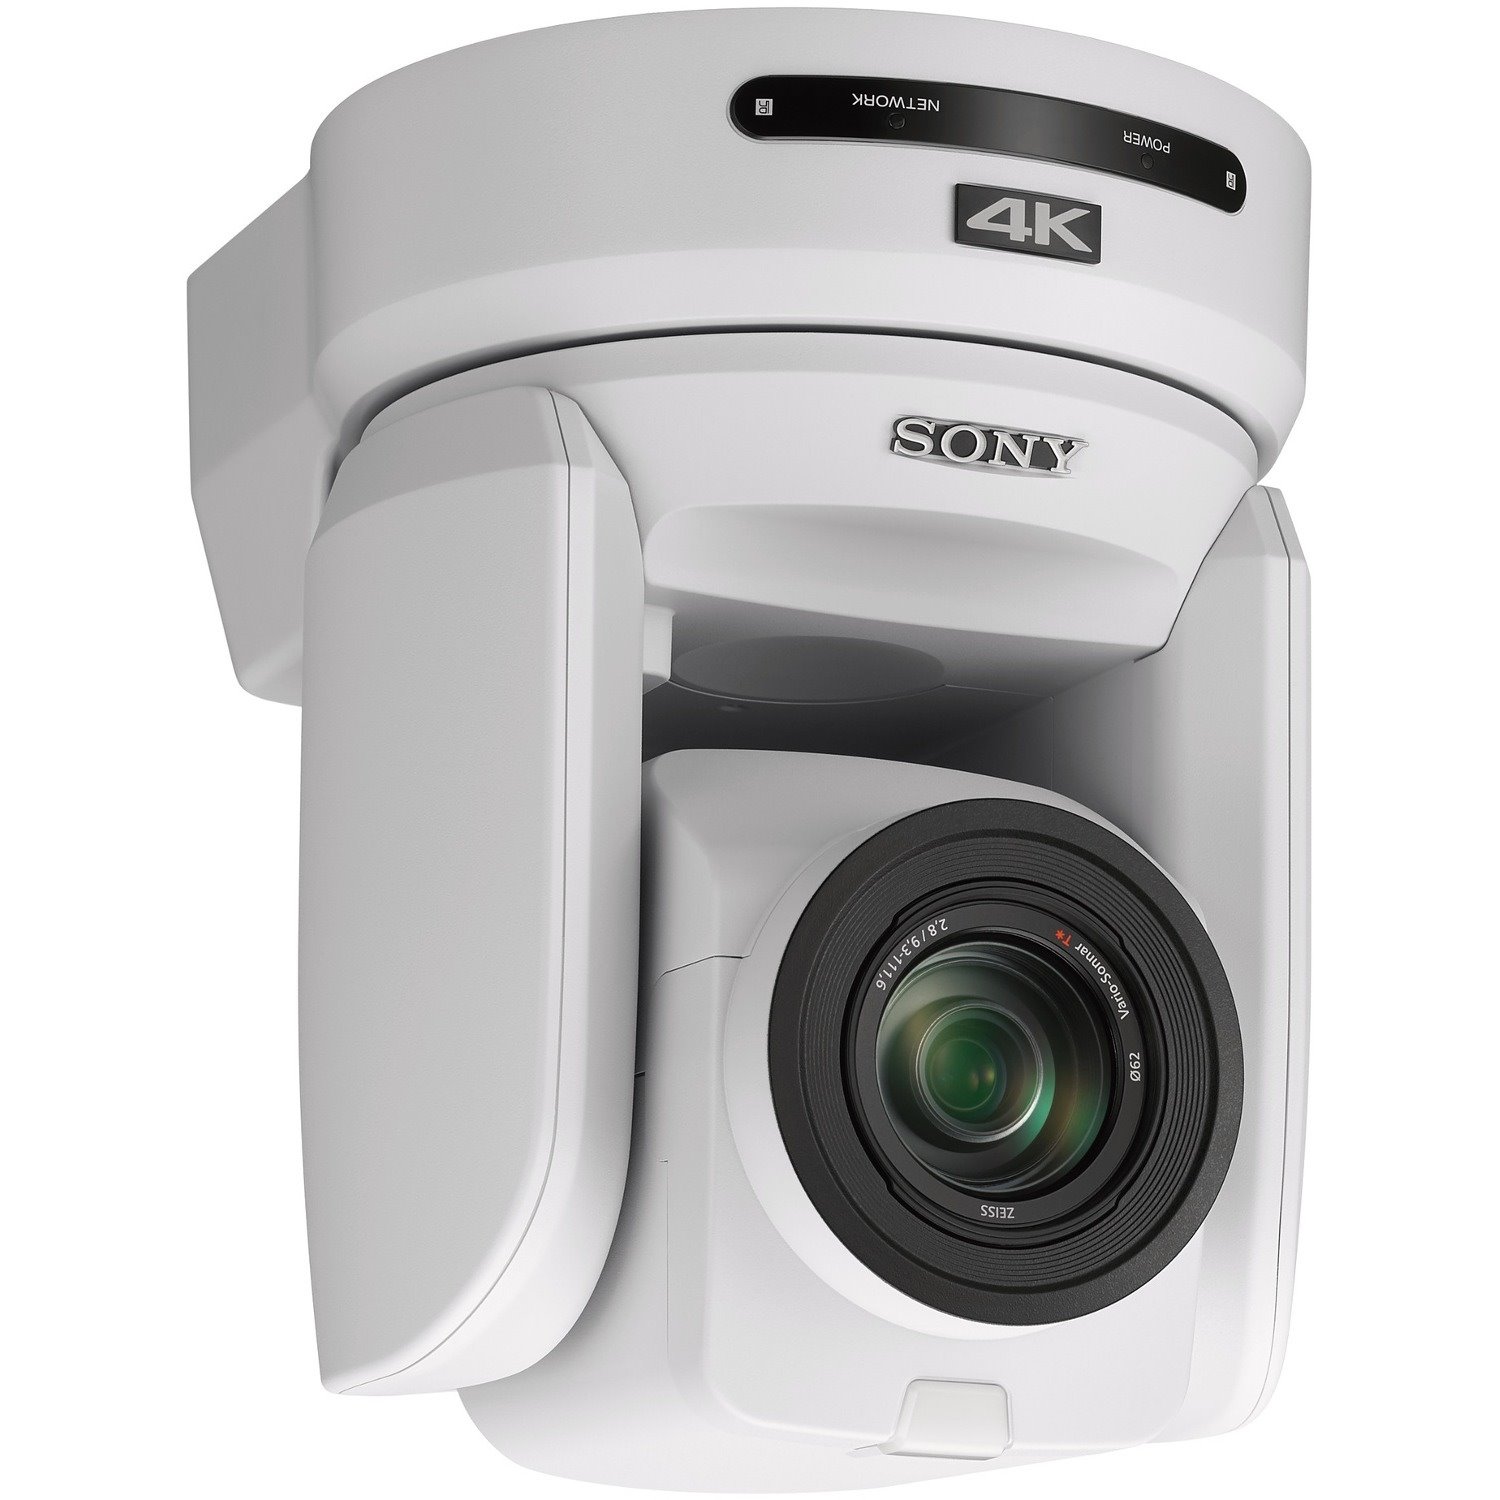 Sony Pro BRC-X1000 14.2 Megapixel HD Network Camera - Compact Dome - TAA Compliant